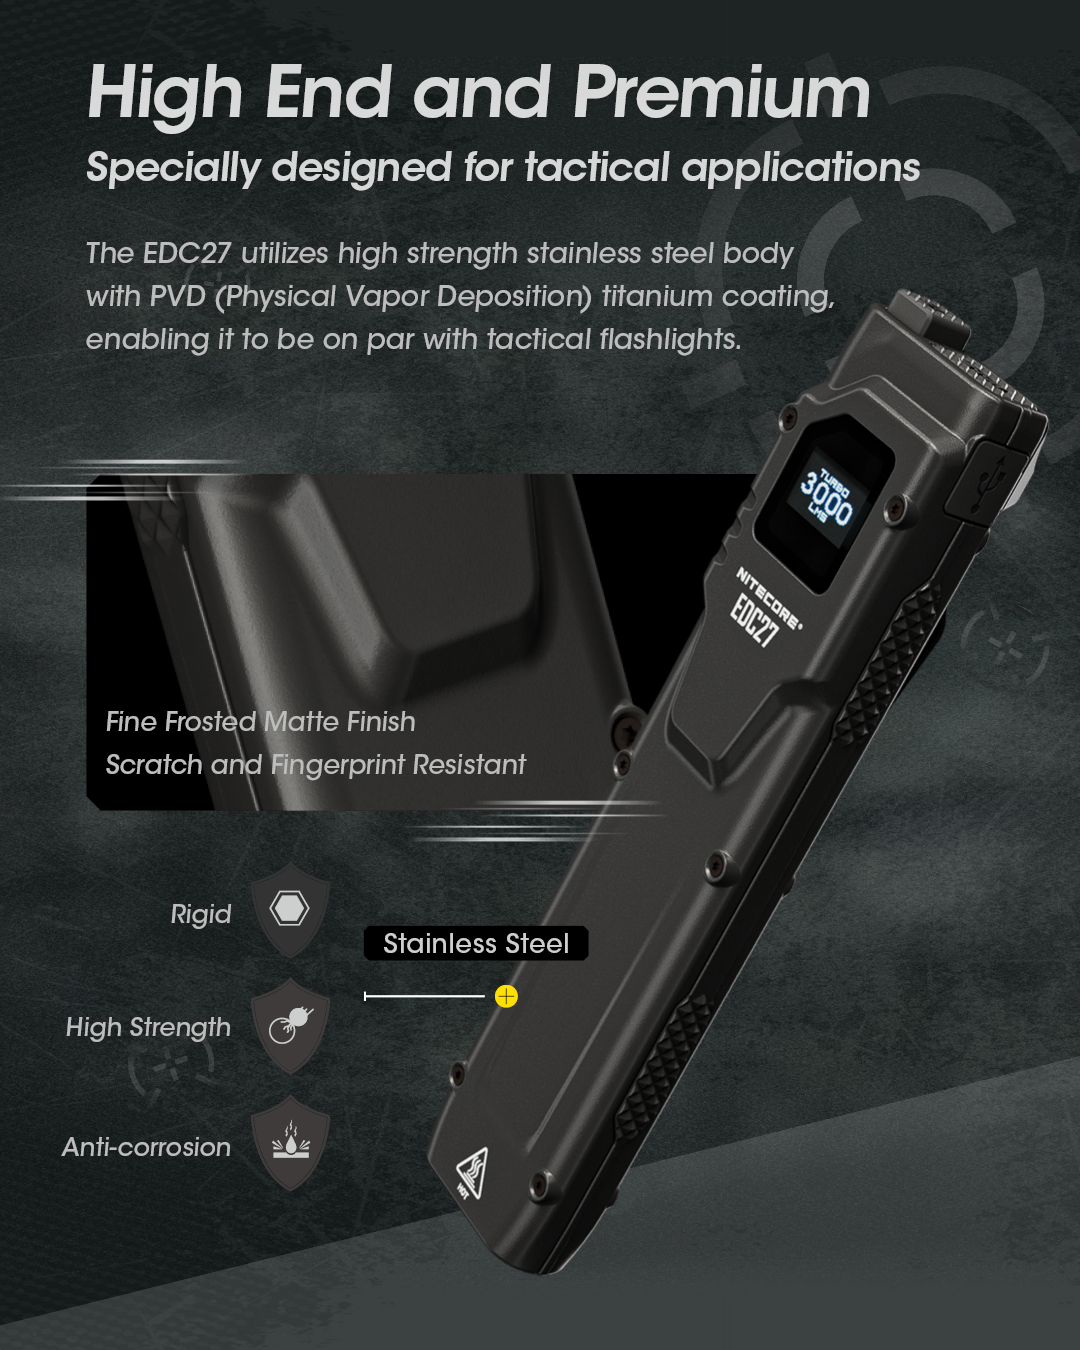 Nitecore EDC27 3000 Lumen EDC USB-C Rechargeable Flashlight